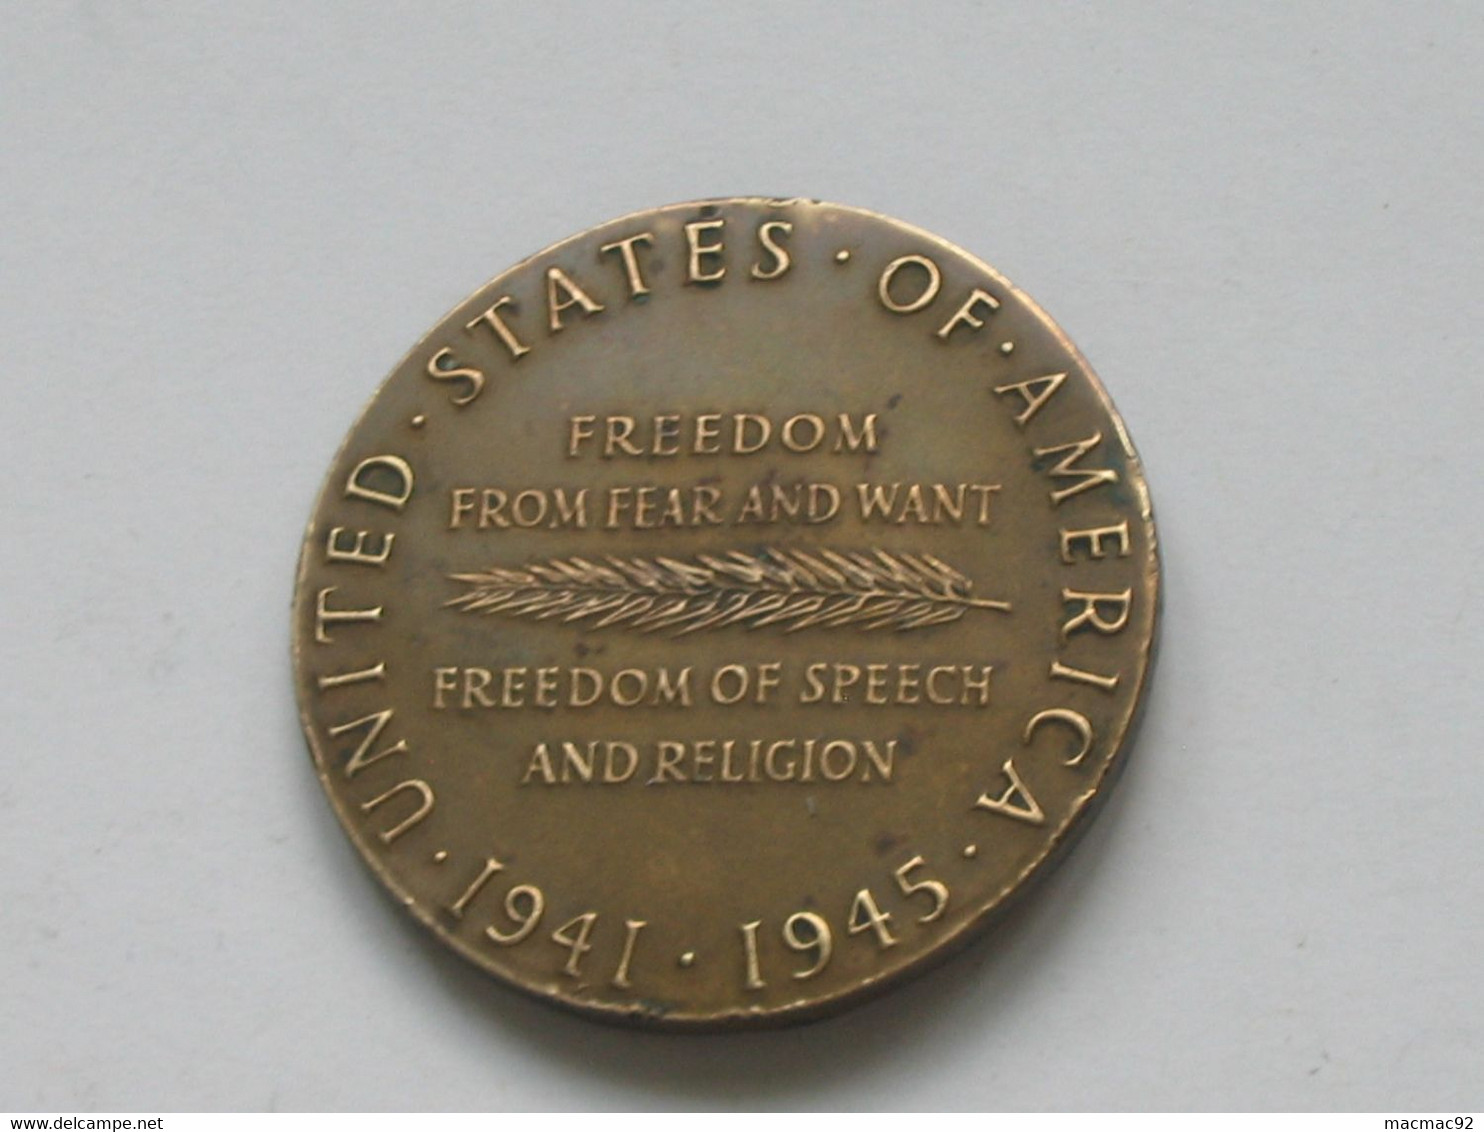 Décoration/Médaille USA - WORLD WAR II - United States Of America - 1941-1945    **** EN ACHAT IMMEDIAT **** - USA